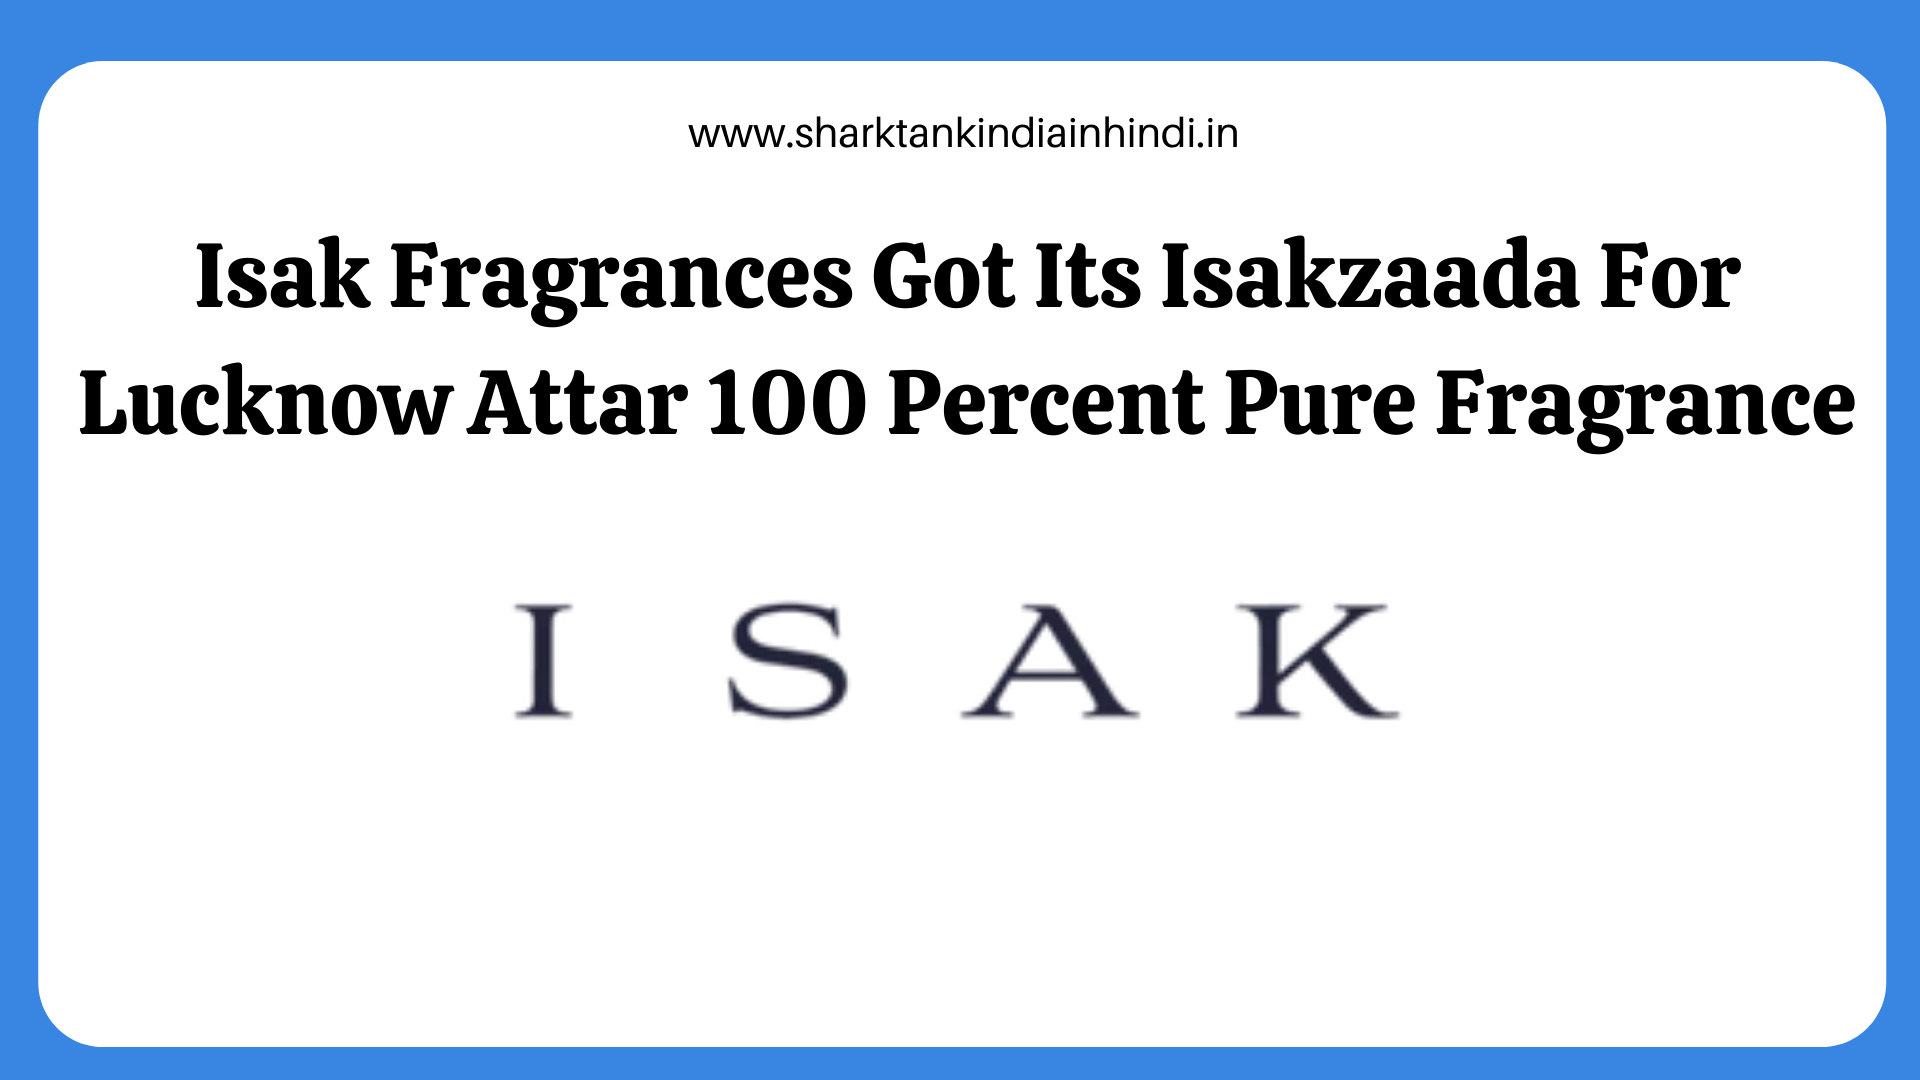 Isak Fragrances Got Its Isakzaada For Lucknow Attar 100 Percent Pure Fragrance